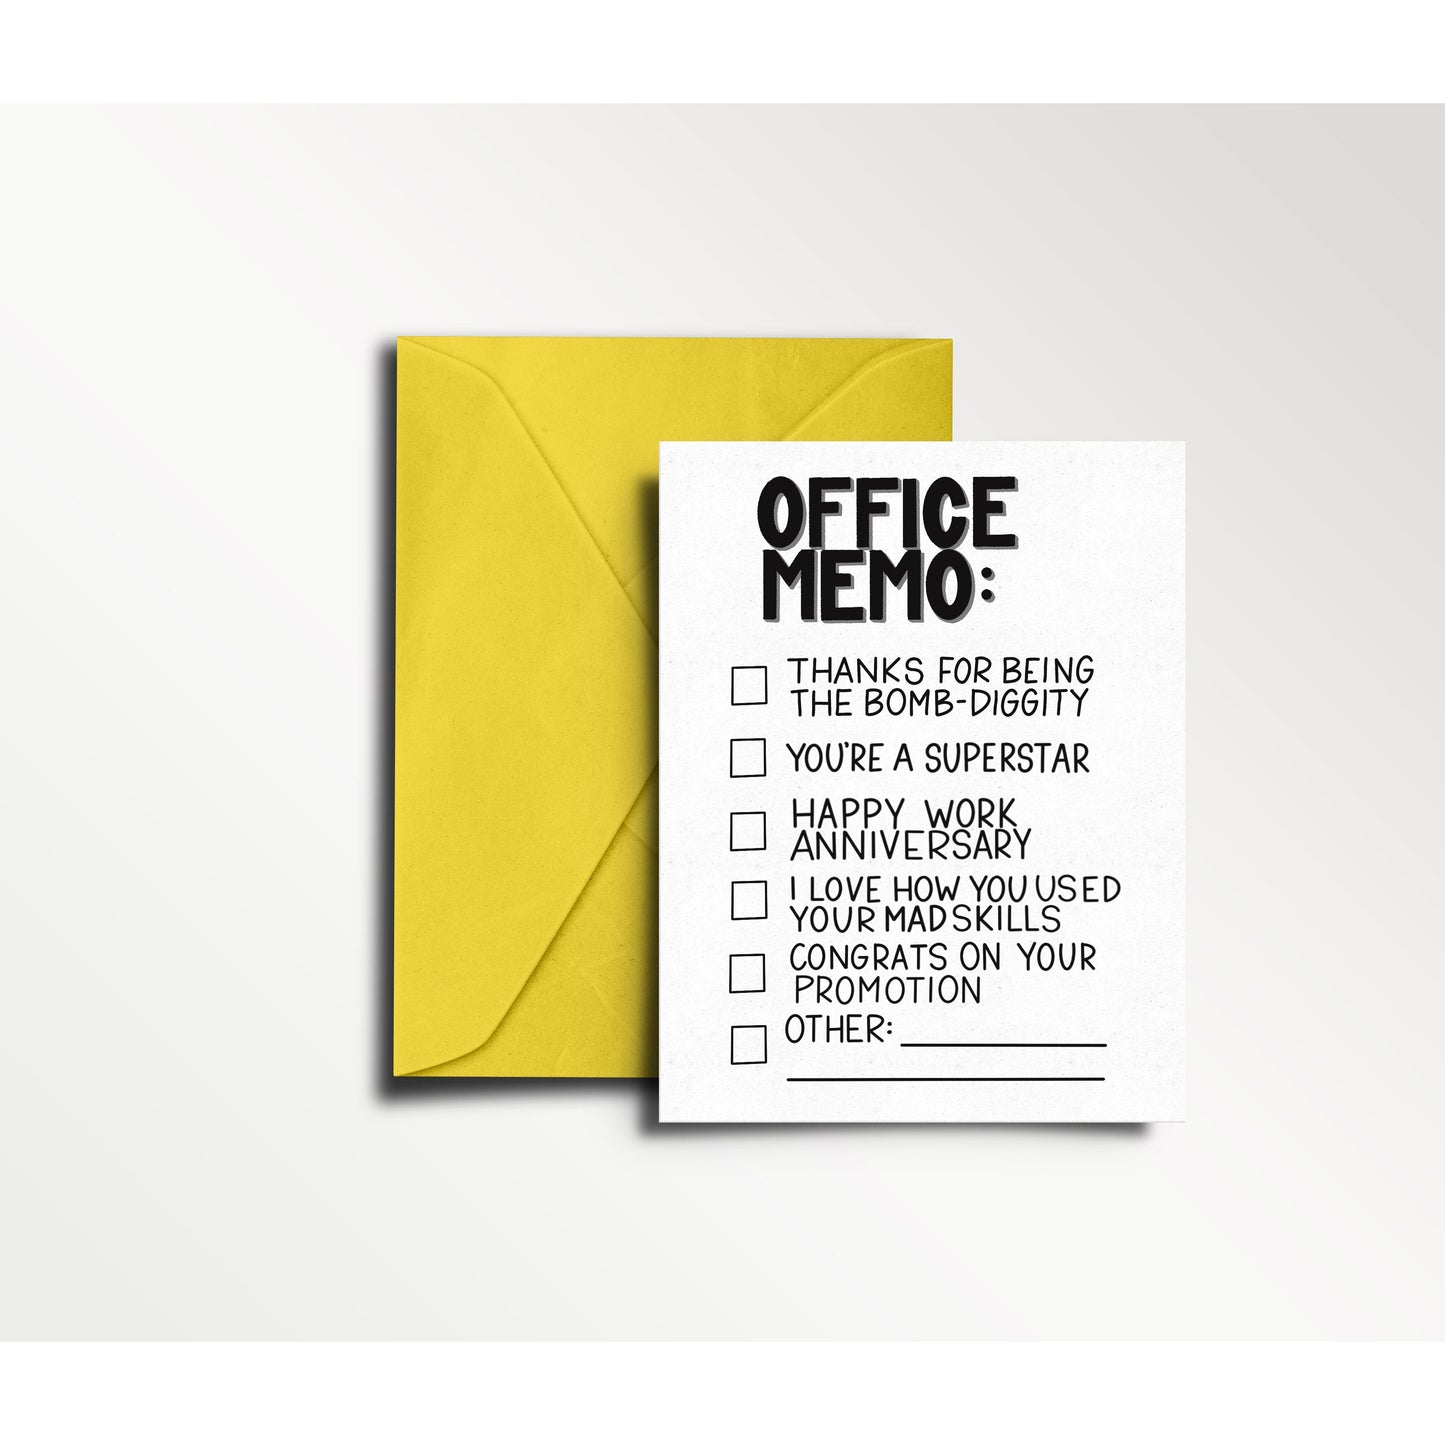 Office Memo - Boss Edition